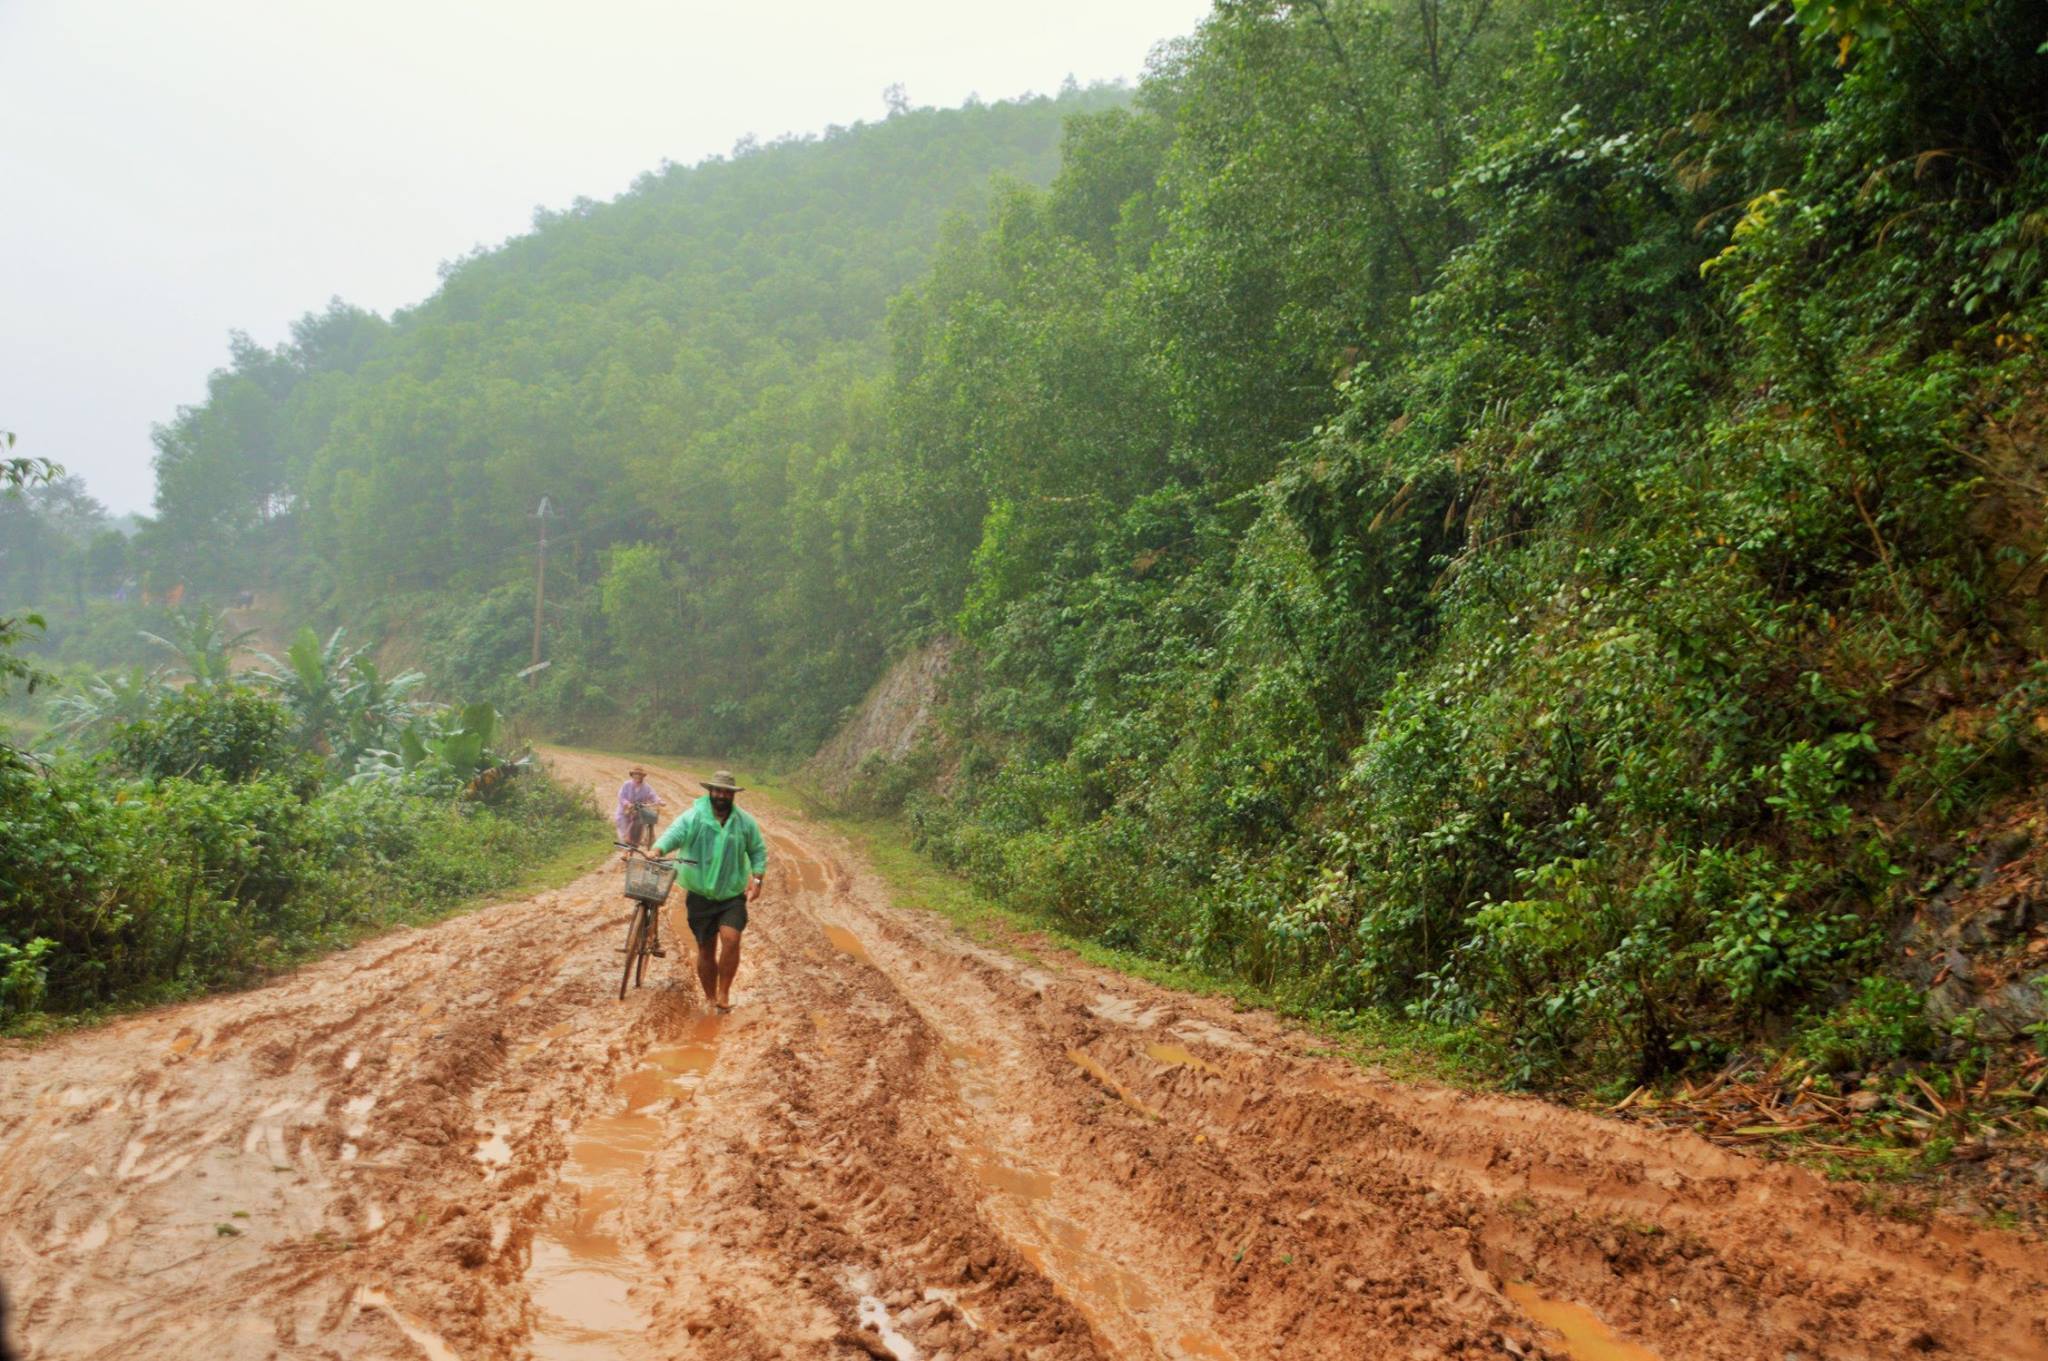 Two cyclists tramp through mud during Vietnam's rainy season